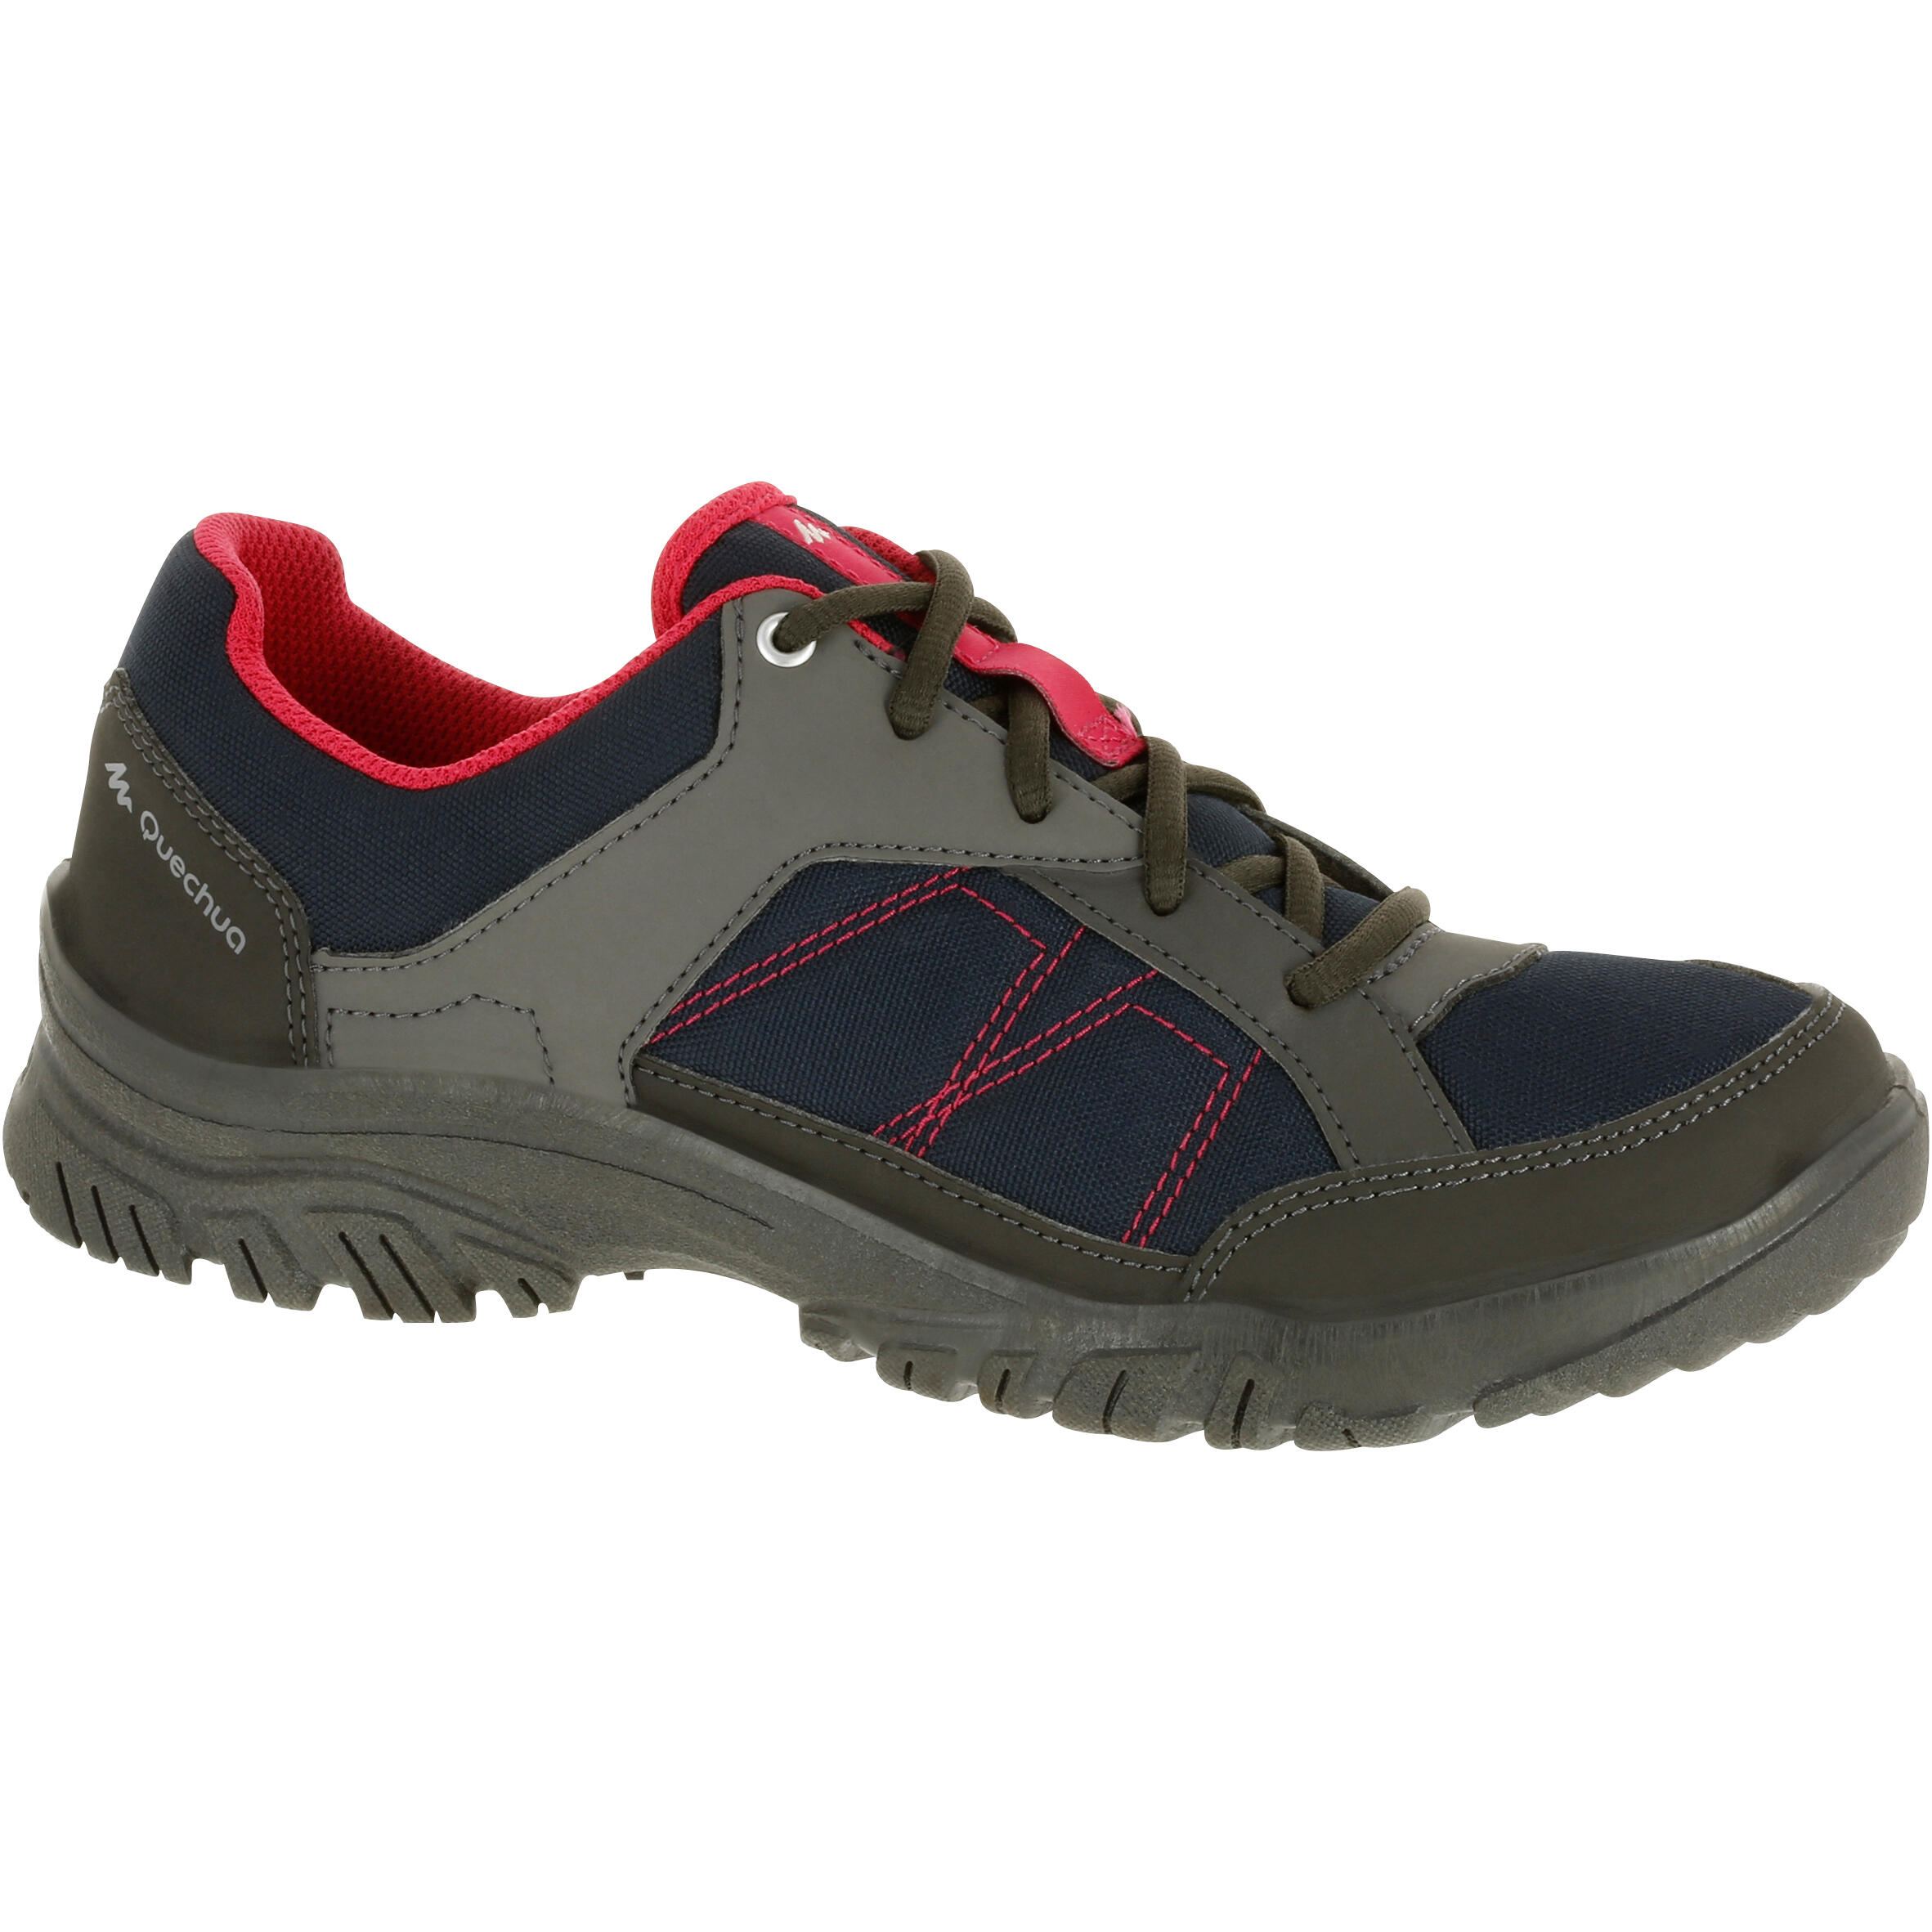 trail shoes decathlon